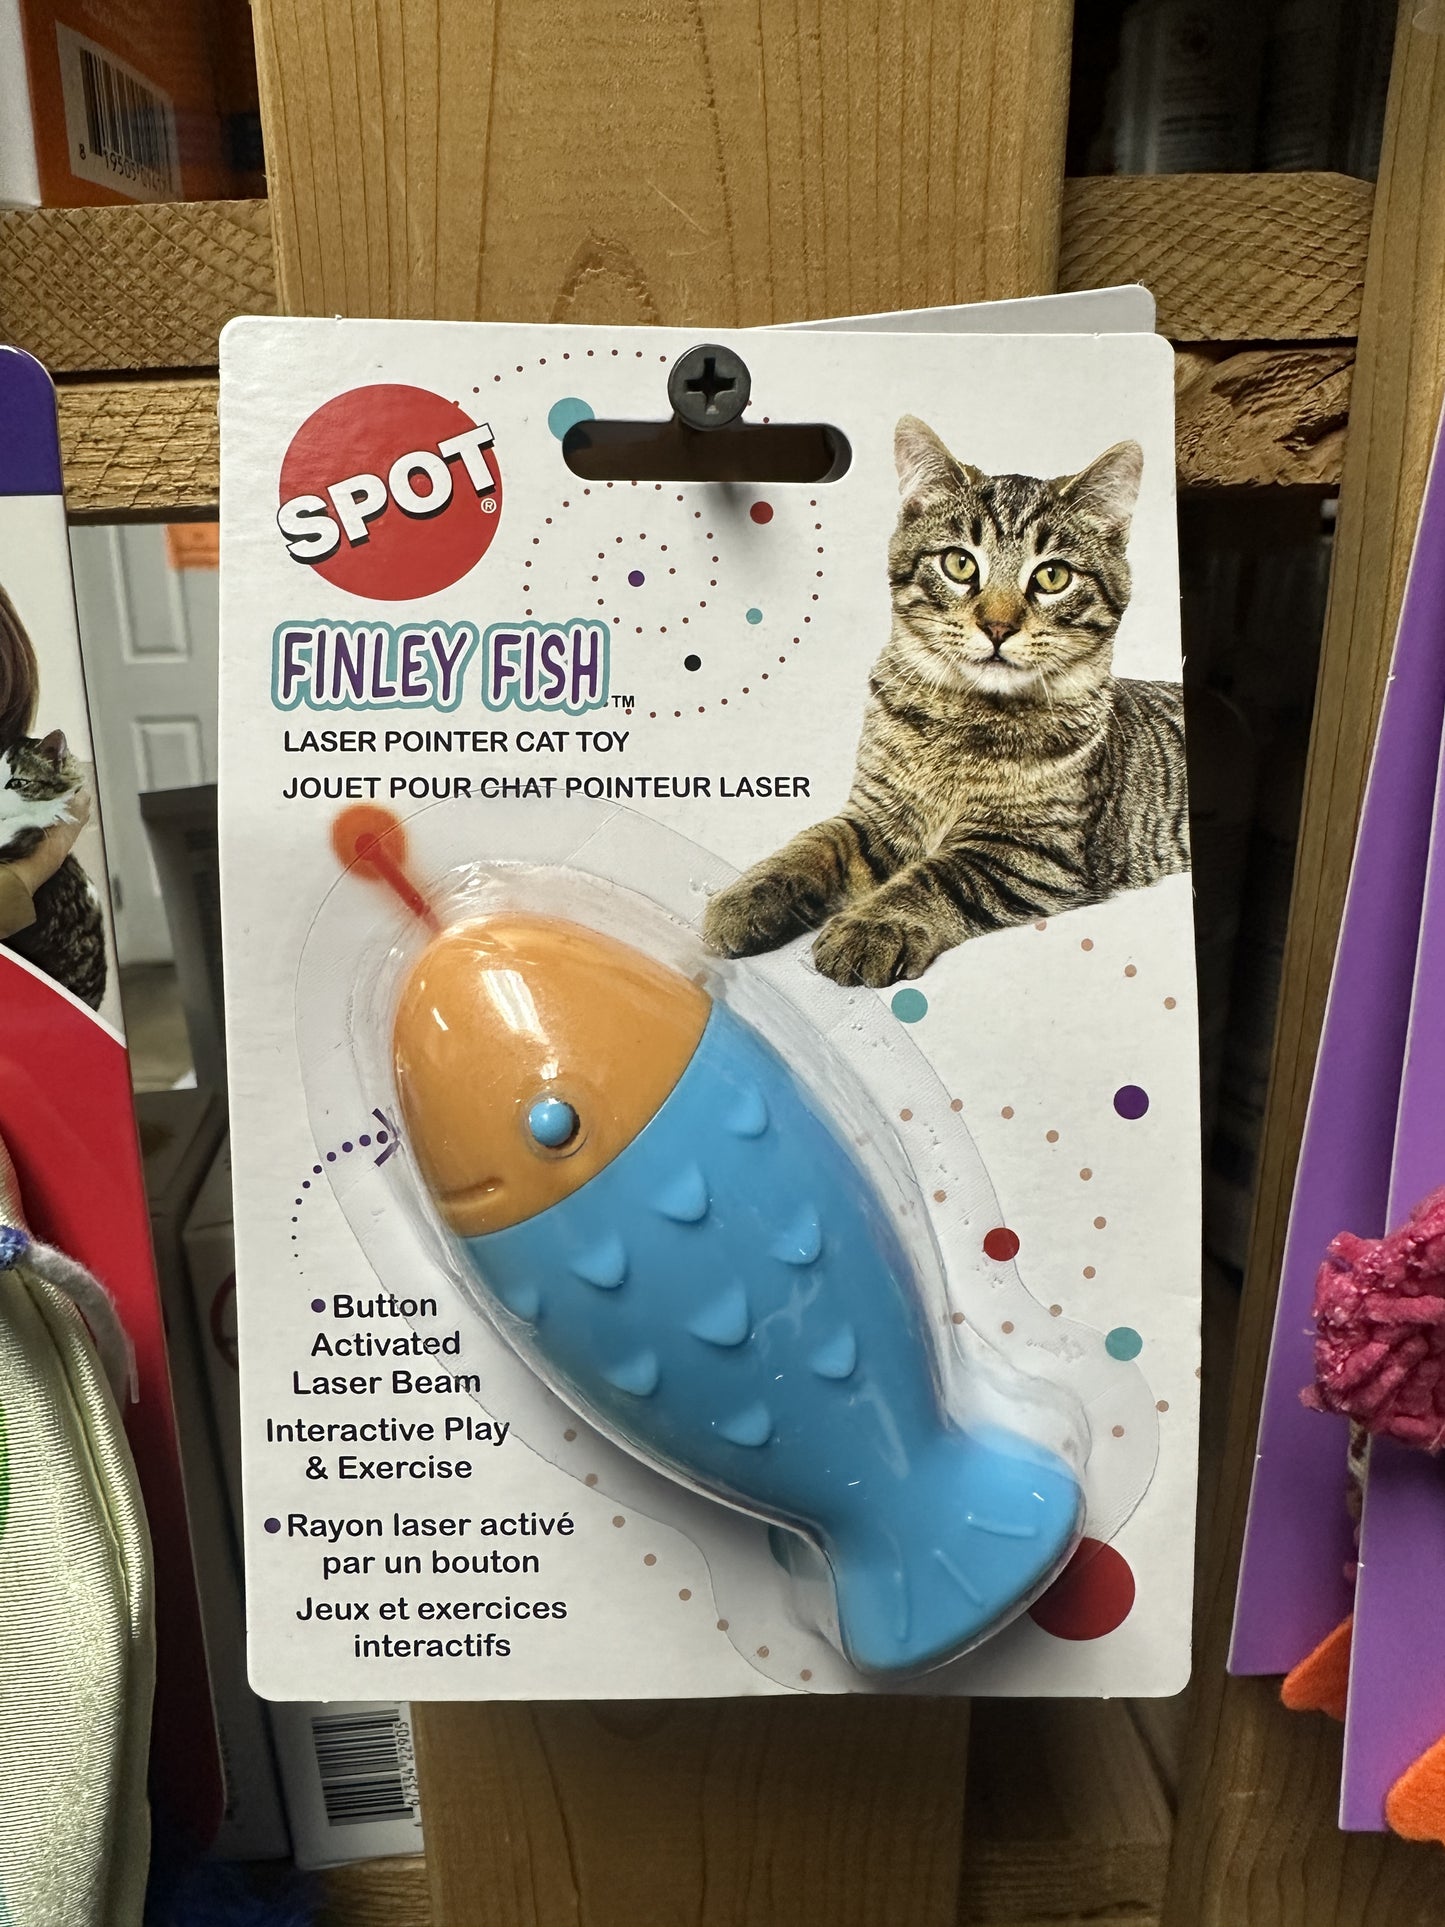 Spot Cat Toy, Finley Fish Laser